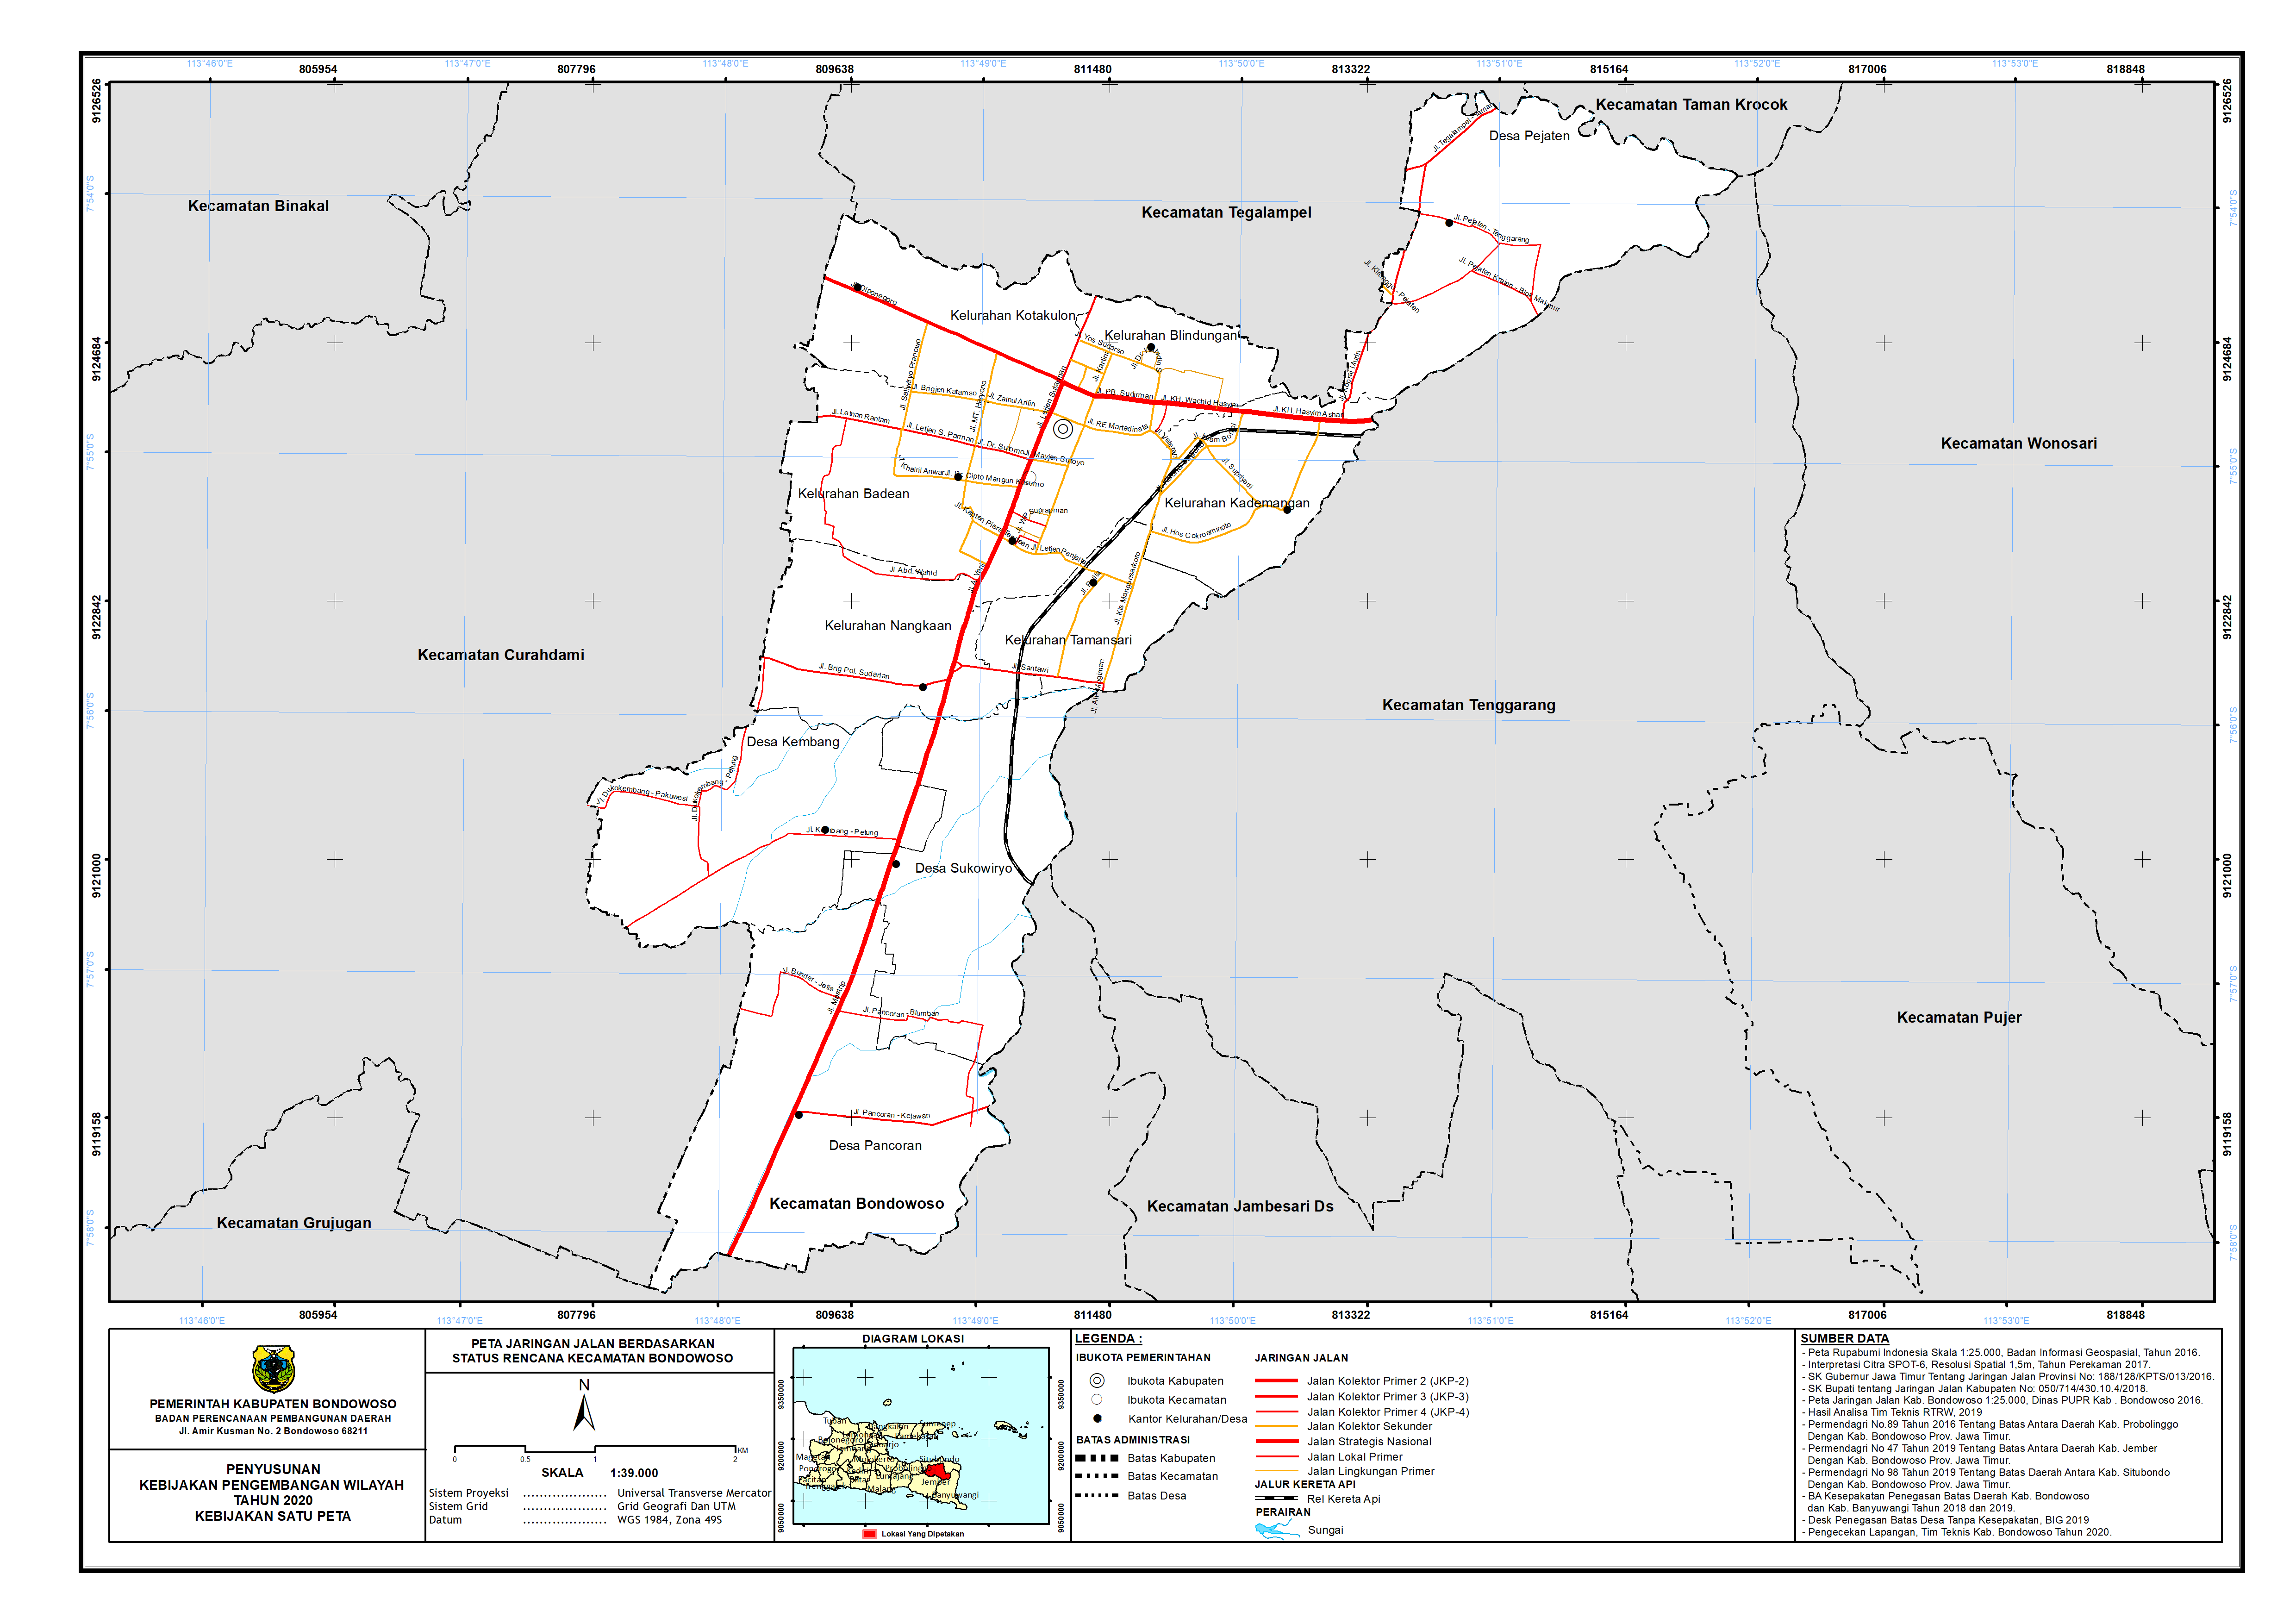 Peta Jaringan Jalan Berdasarkan Status Rencana Kecamatan Bondowoso.png